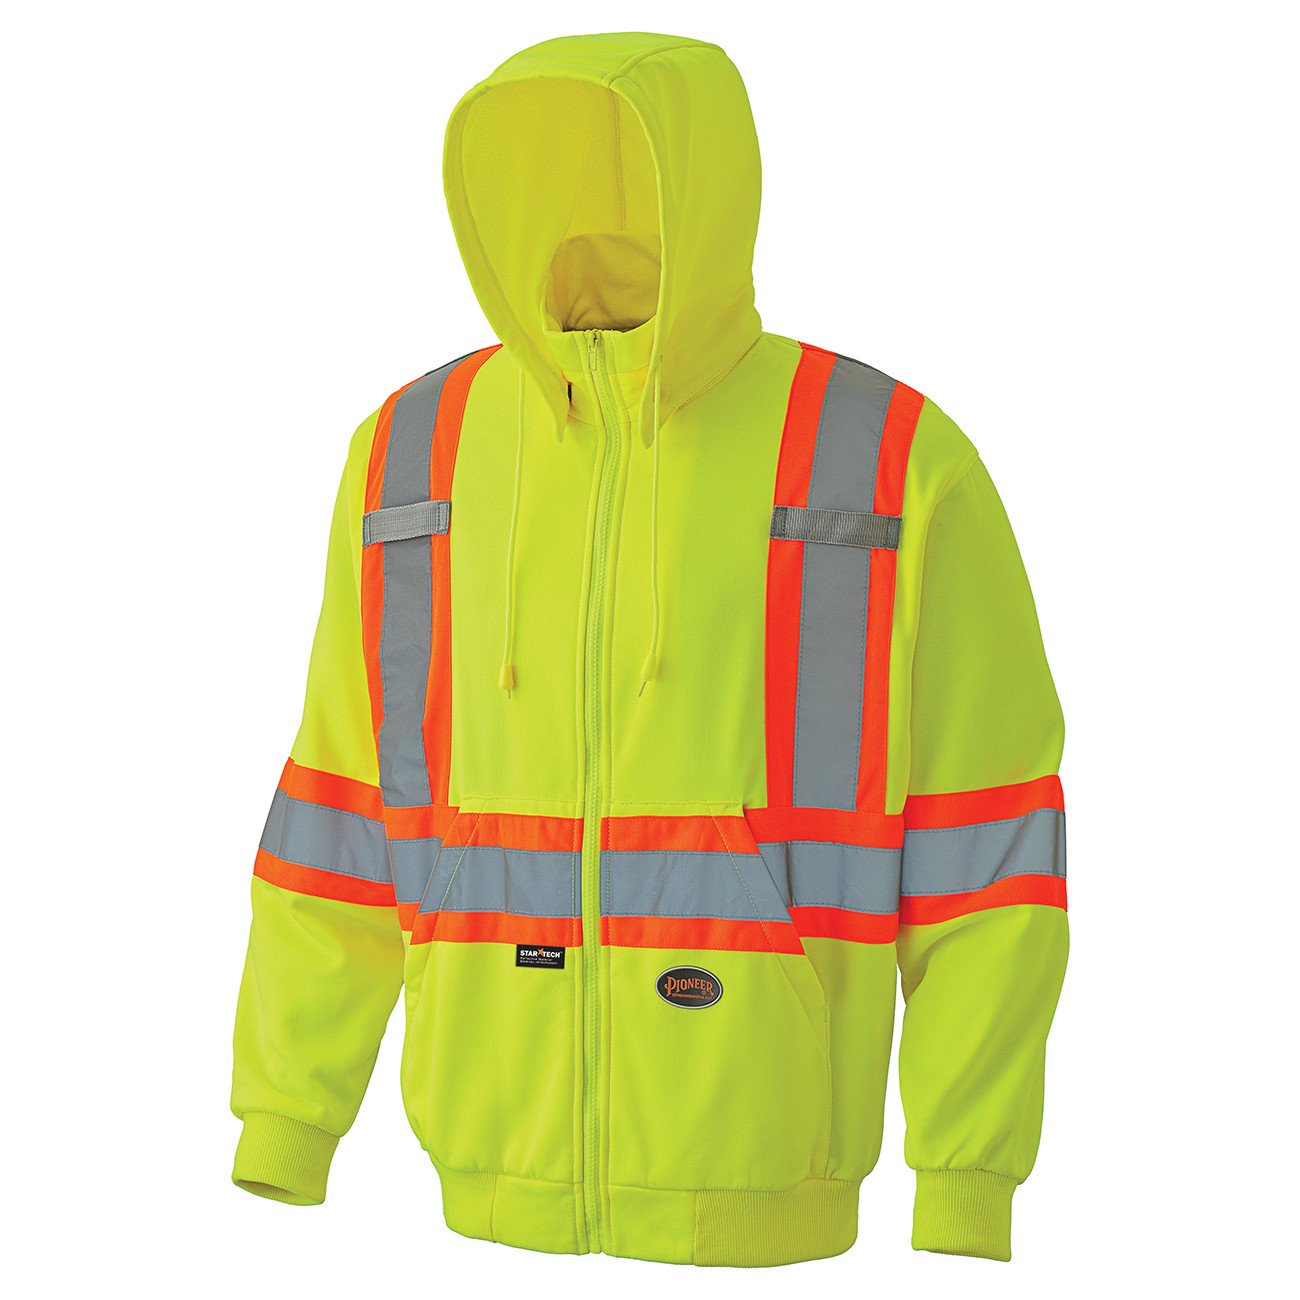 Microfleece Jacket – The Staff Uniform Company